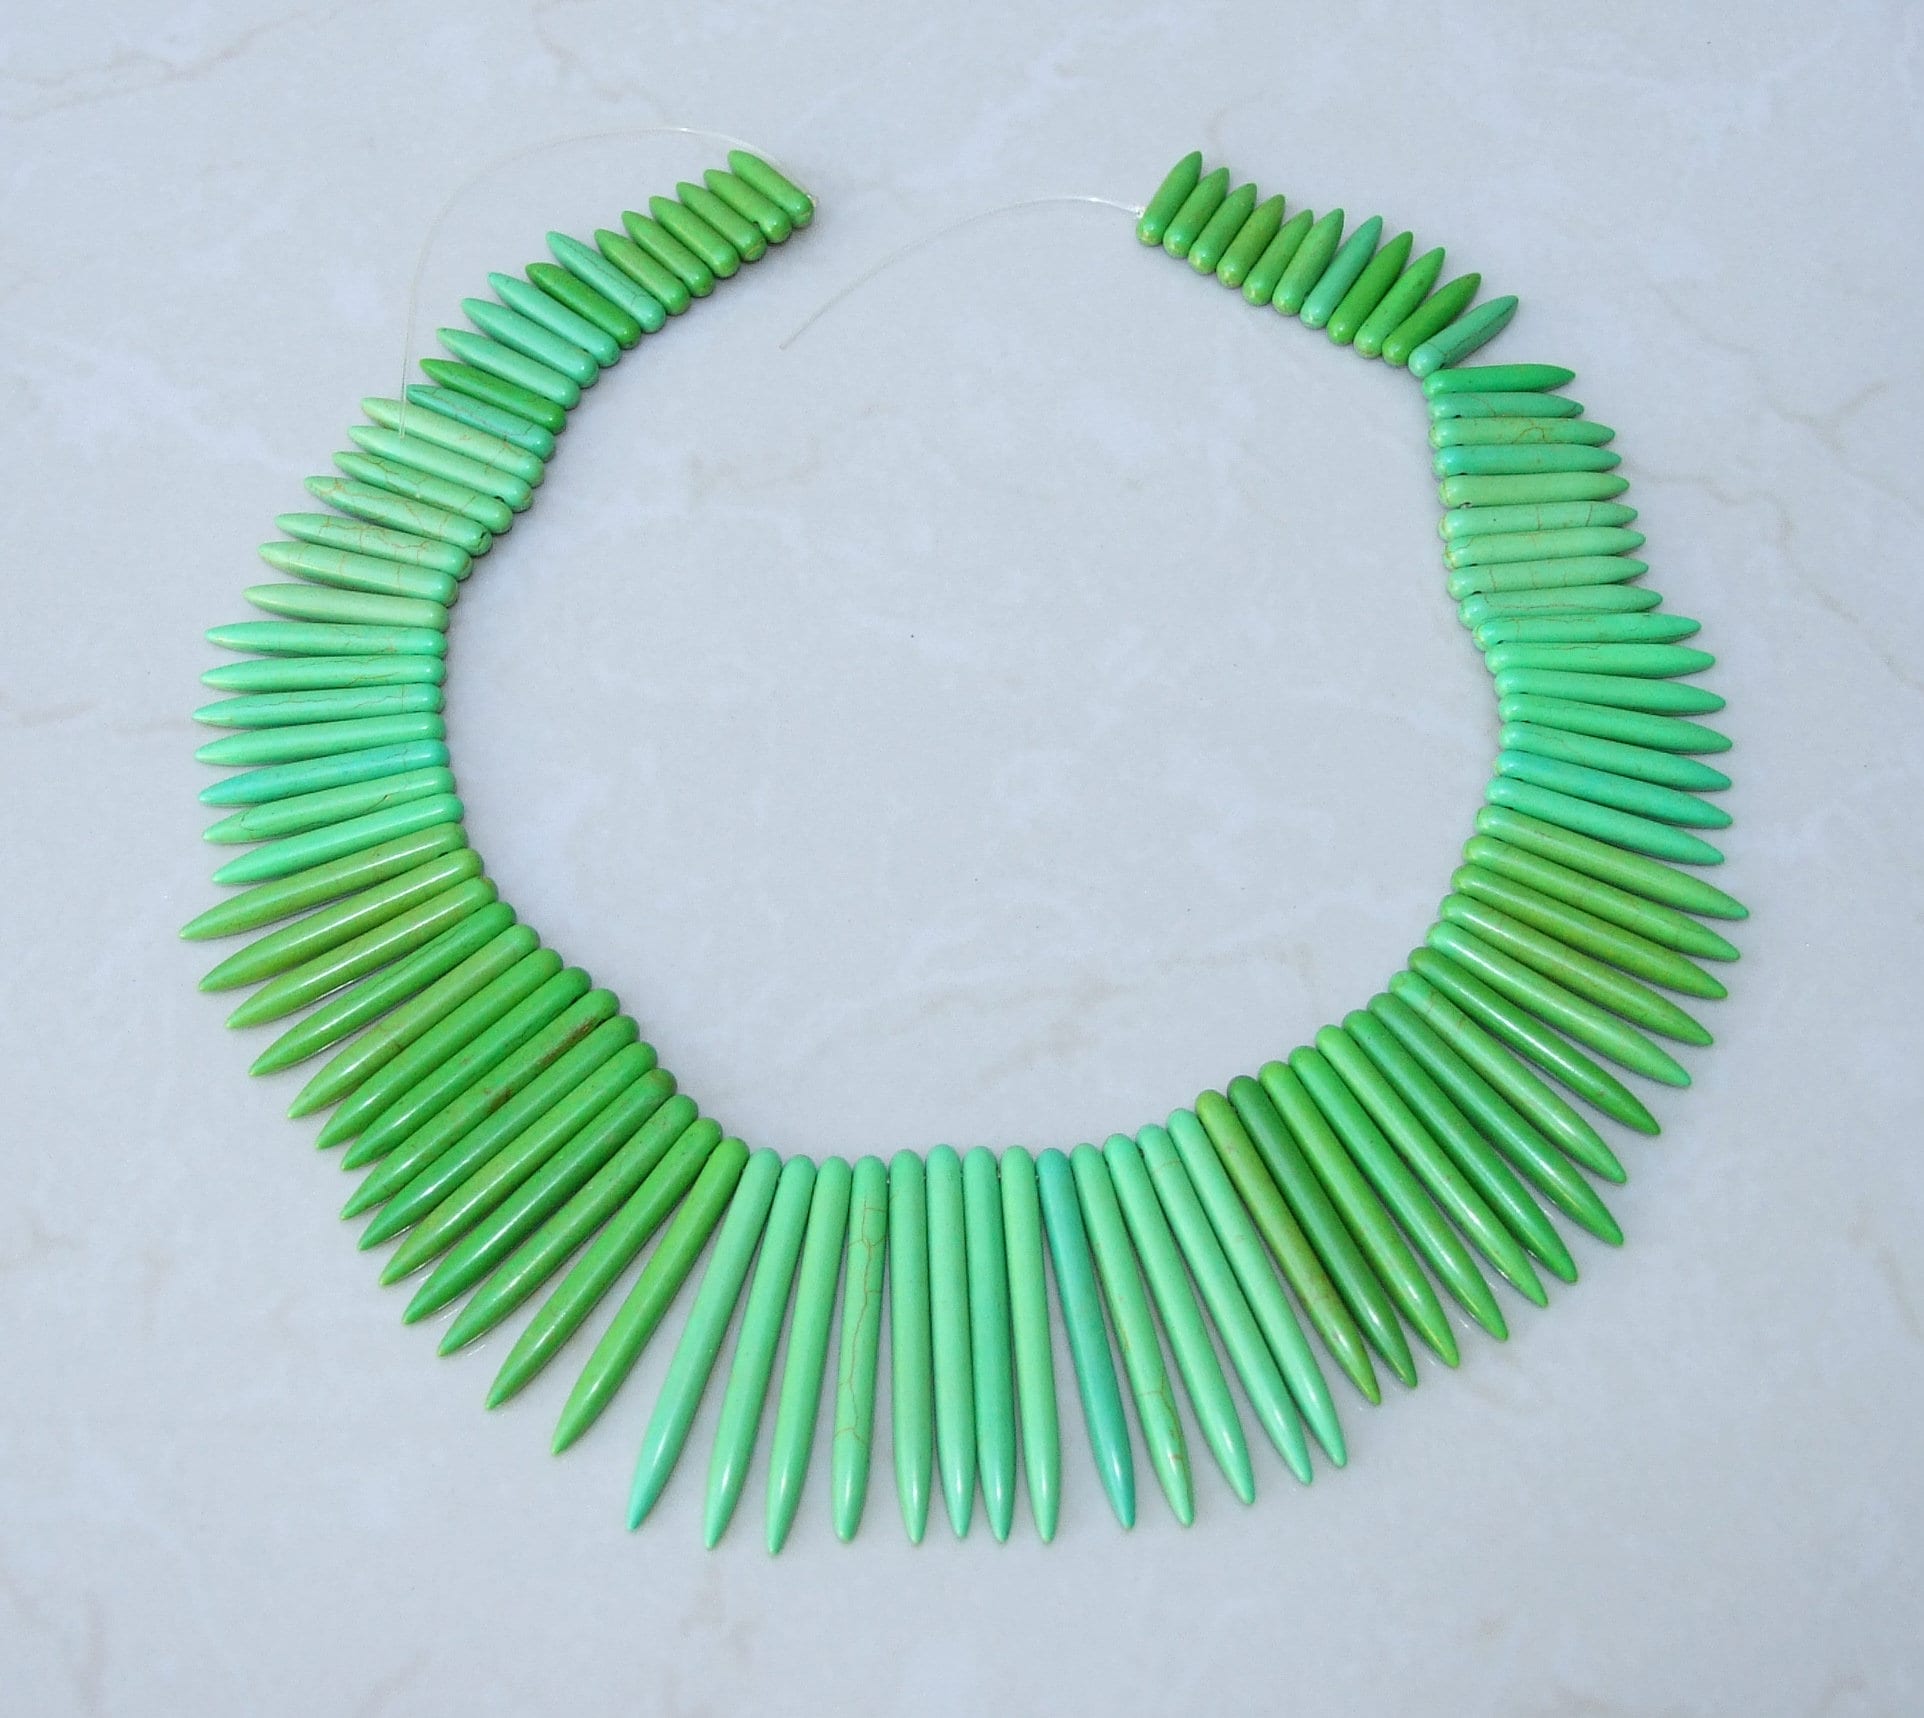 Green Turquoise, Spike Beads, Spike Collar, Spike Choker Necklace, Turquoise Spike Necklace, Statement Necklace, Spike Bib Necklace, 50mm